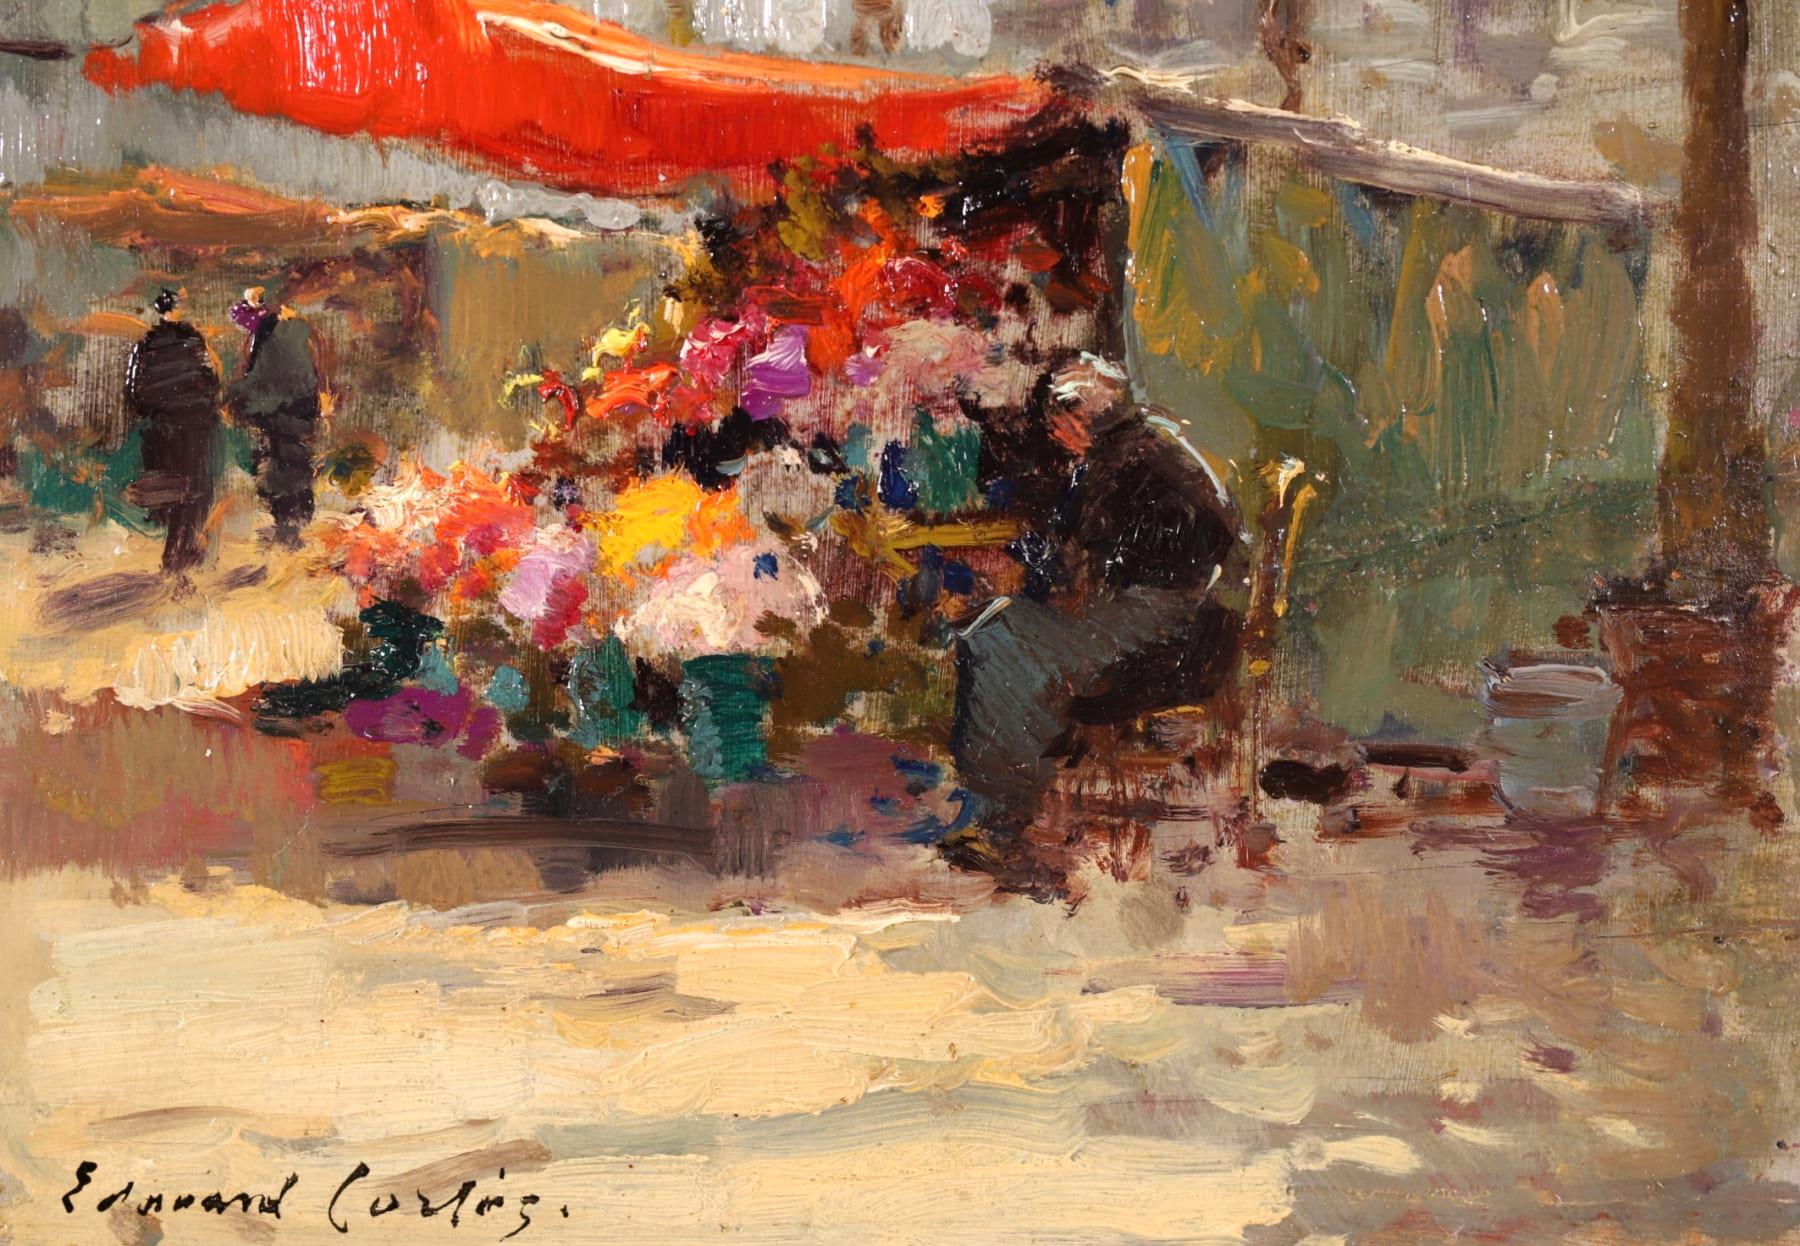 Flower Market - Impressionist Oil, Figures in Cityscape by Edouard Cortès 3